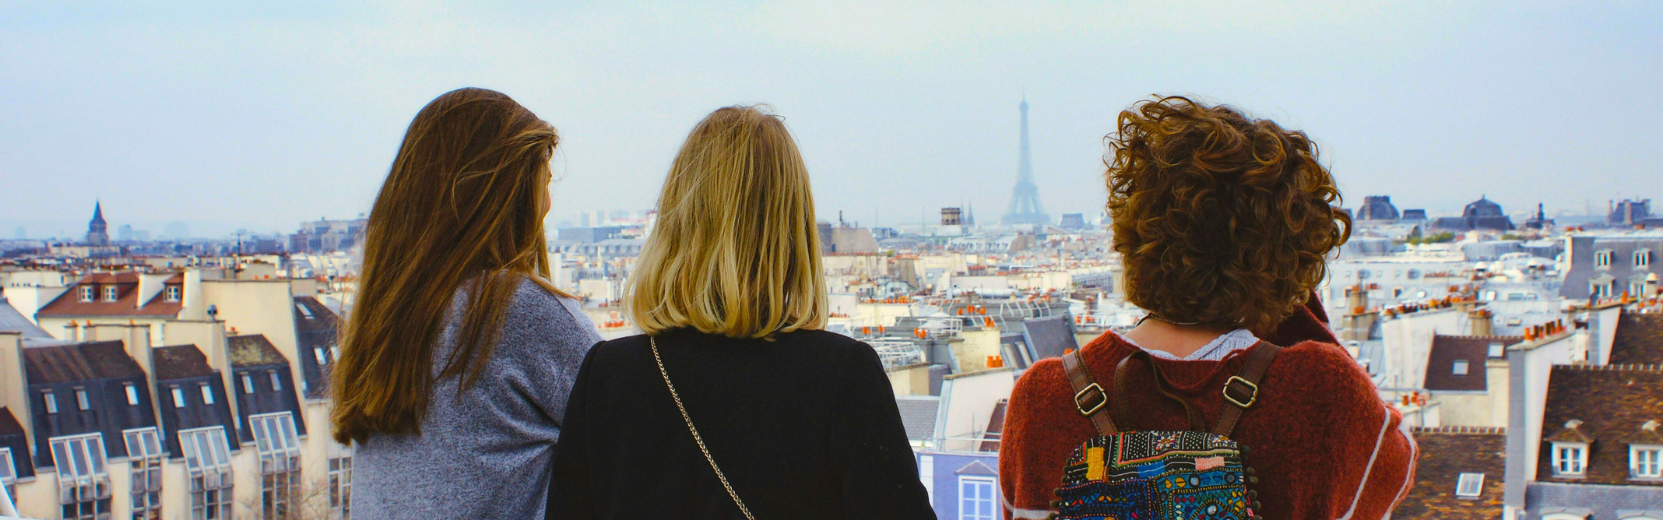 Freundinnen blicken auf den Eiffelturm